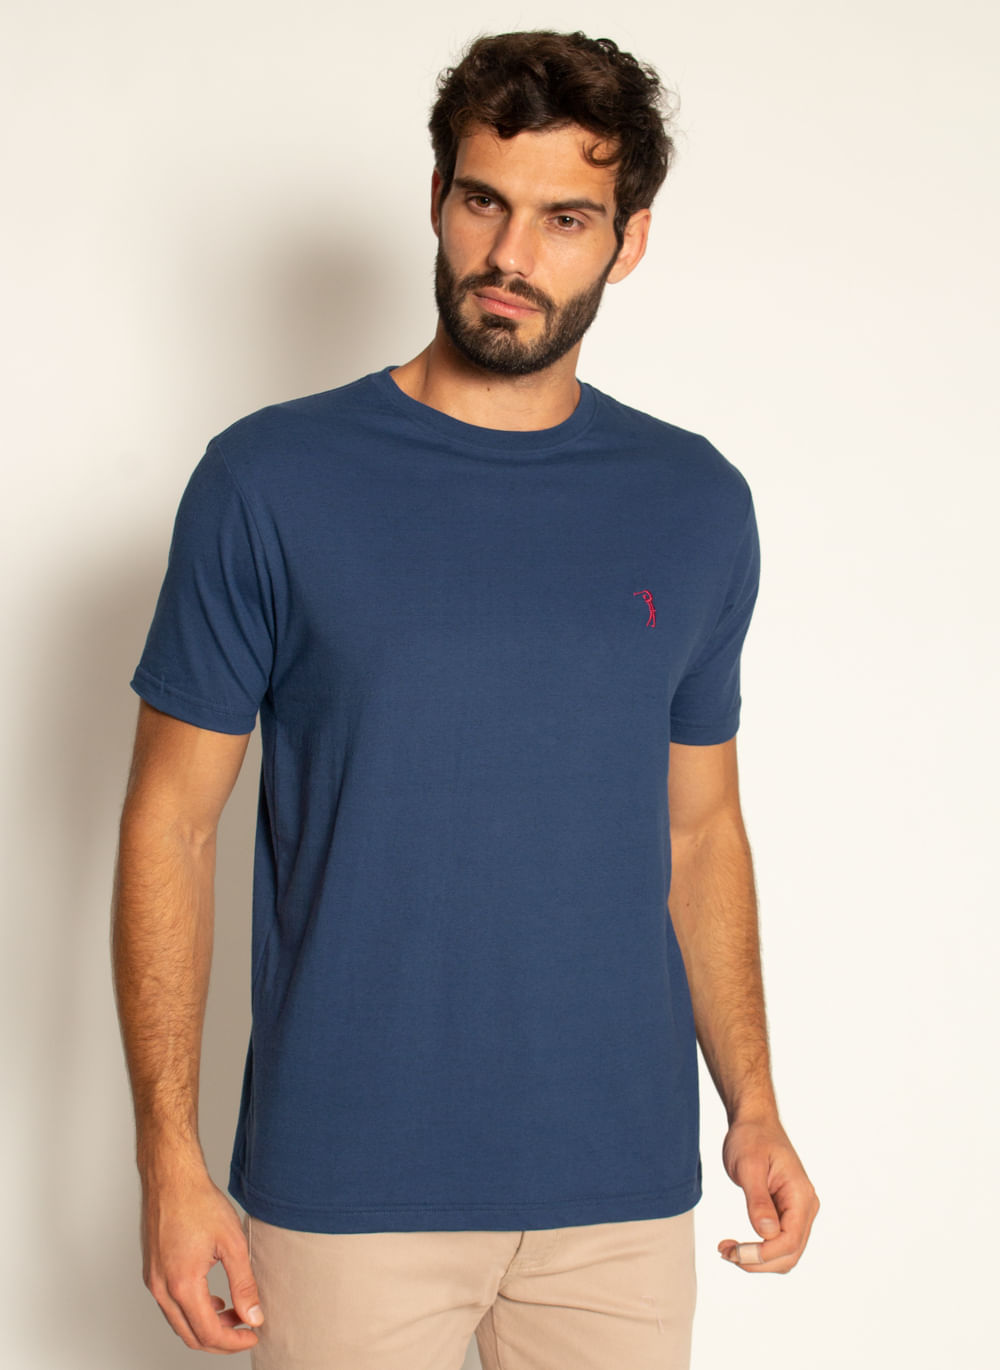 Camiseta-Aleatory-Basica-Lisa-Mescla-Azul-Azul-Royal-P